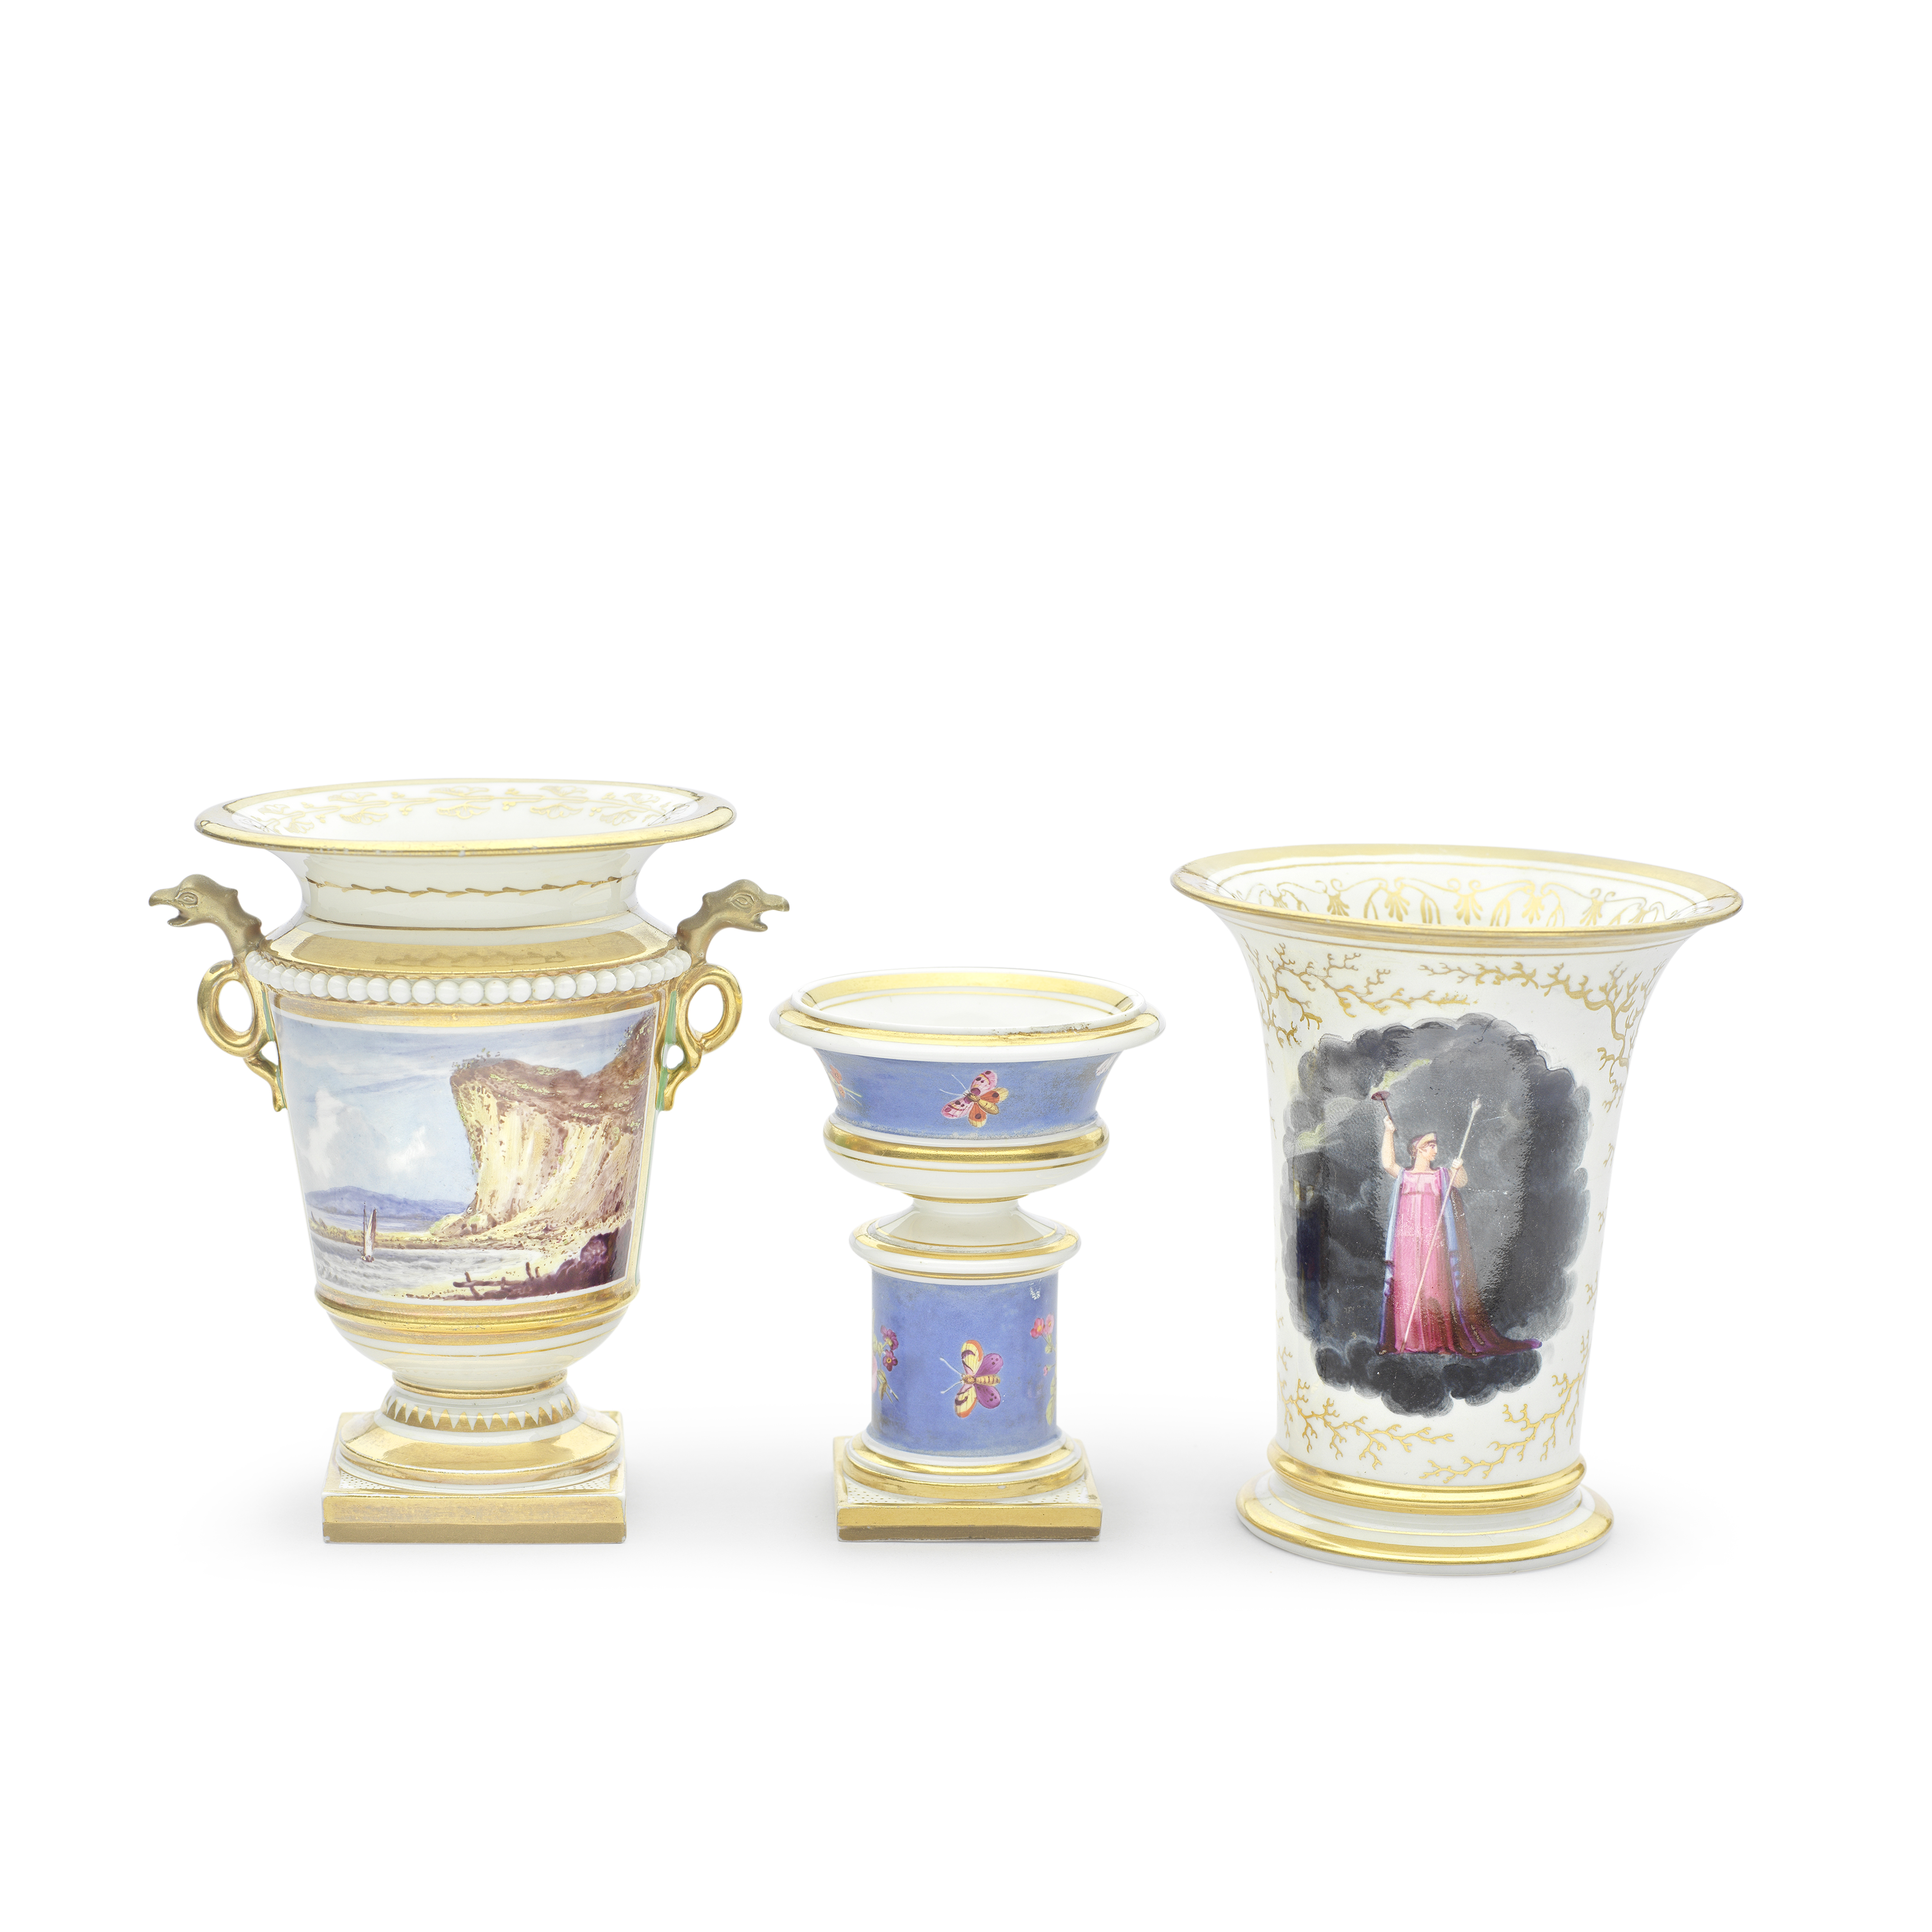 Three Flight, Barr and Barr Worcester vases, circa 1815-30